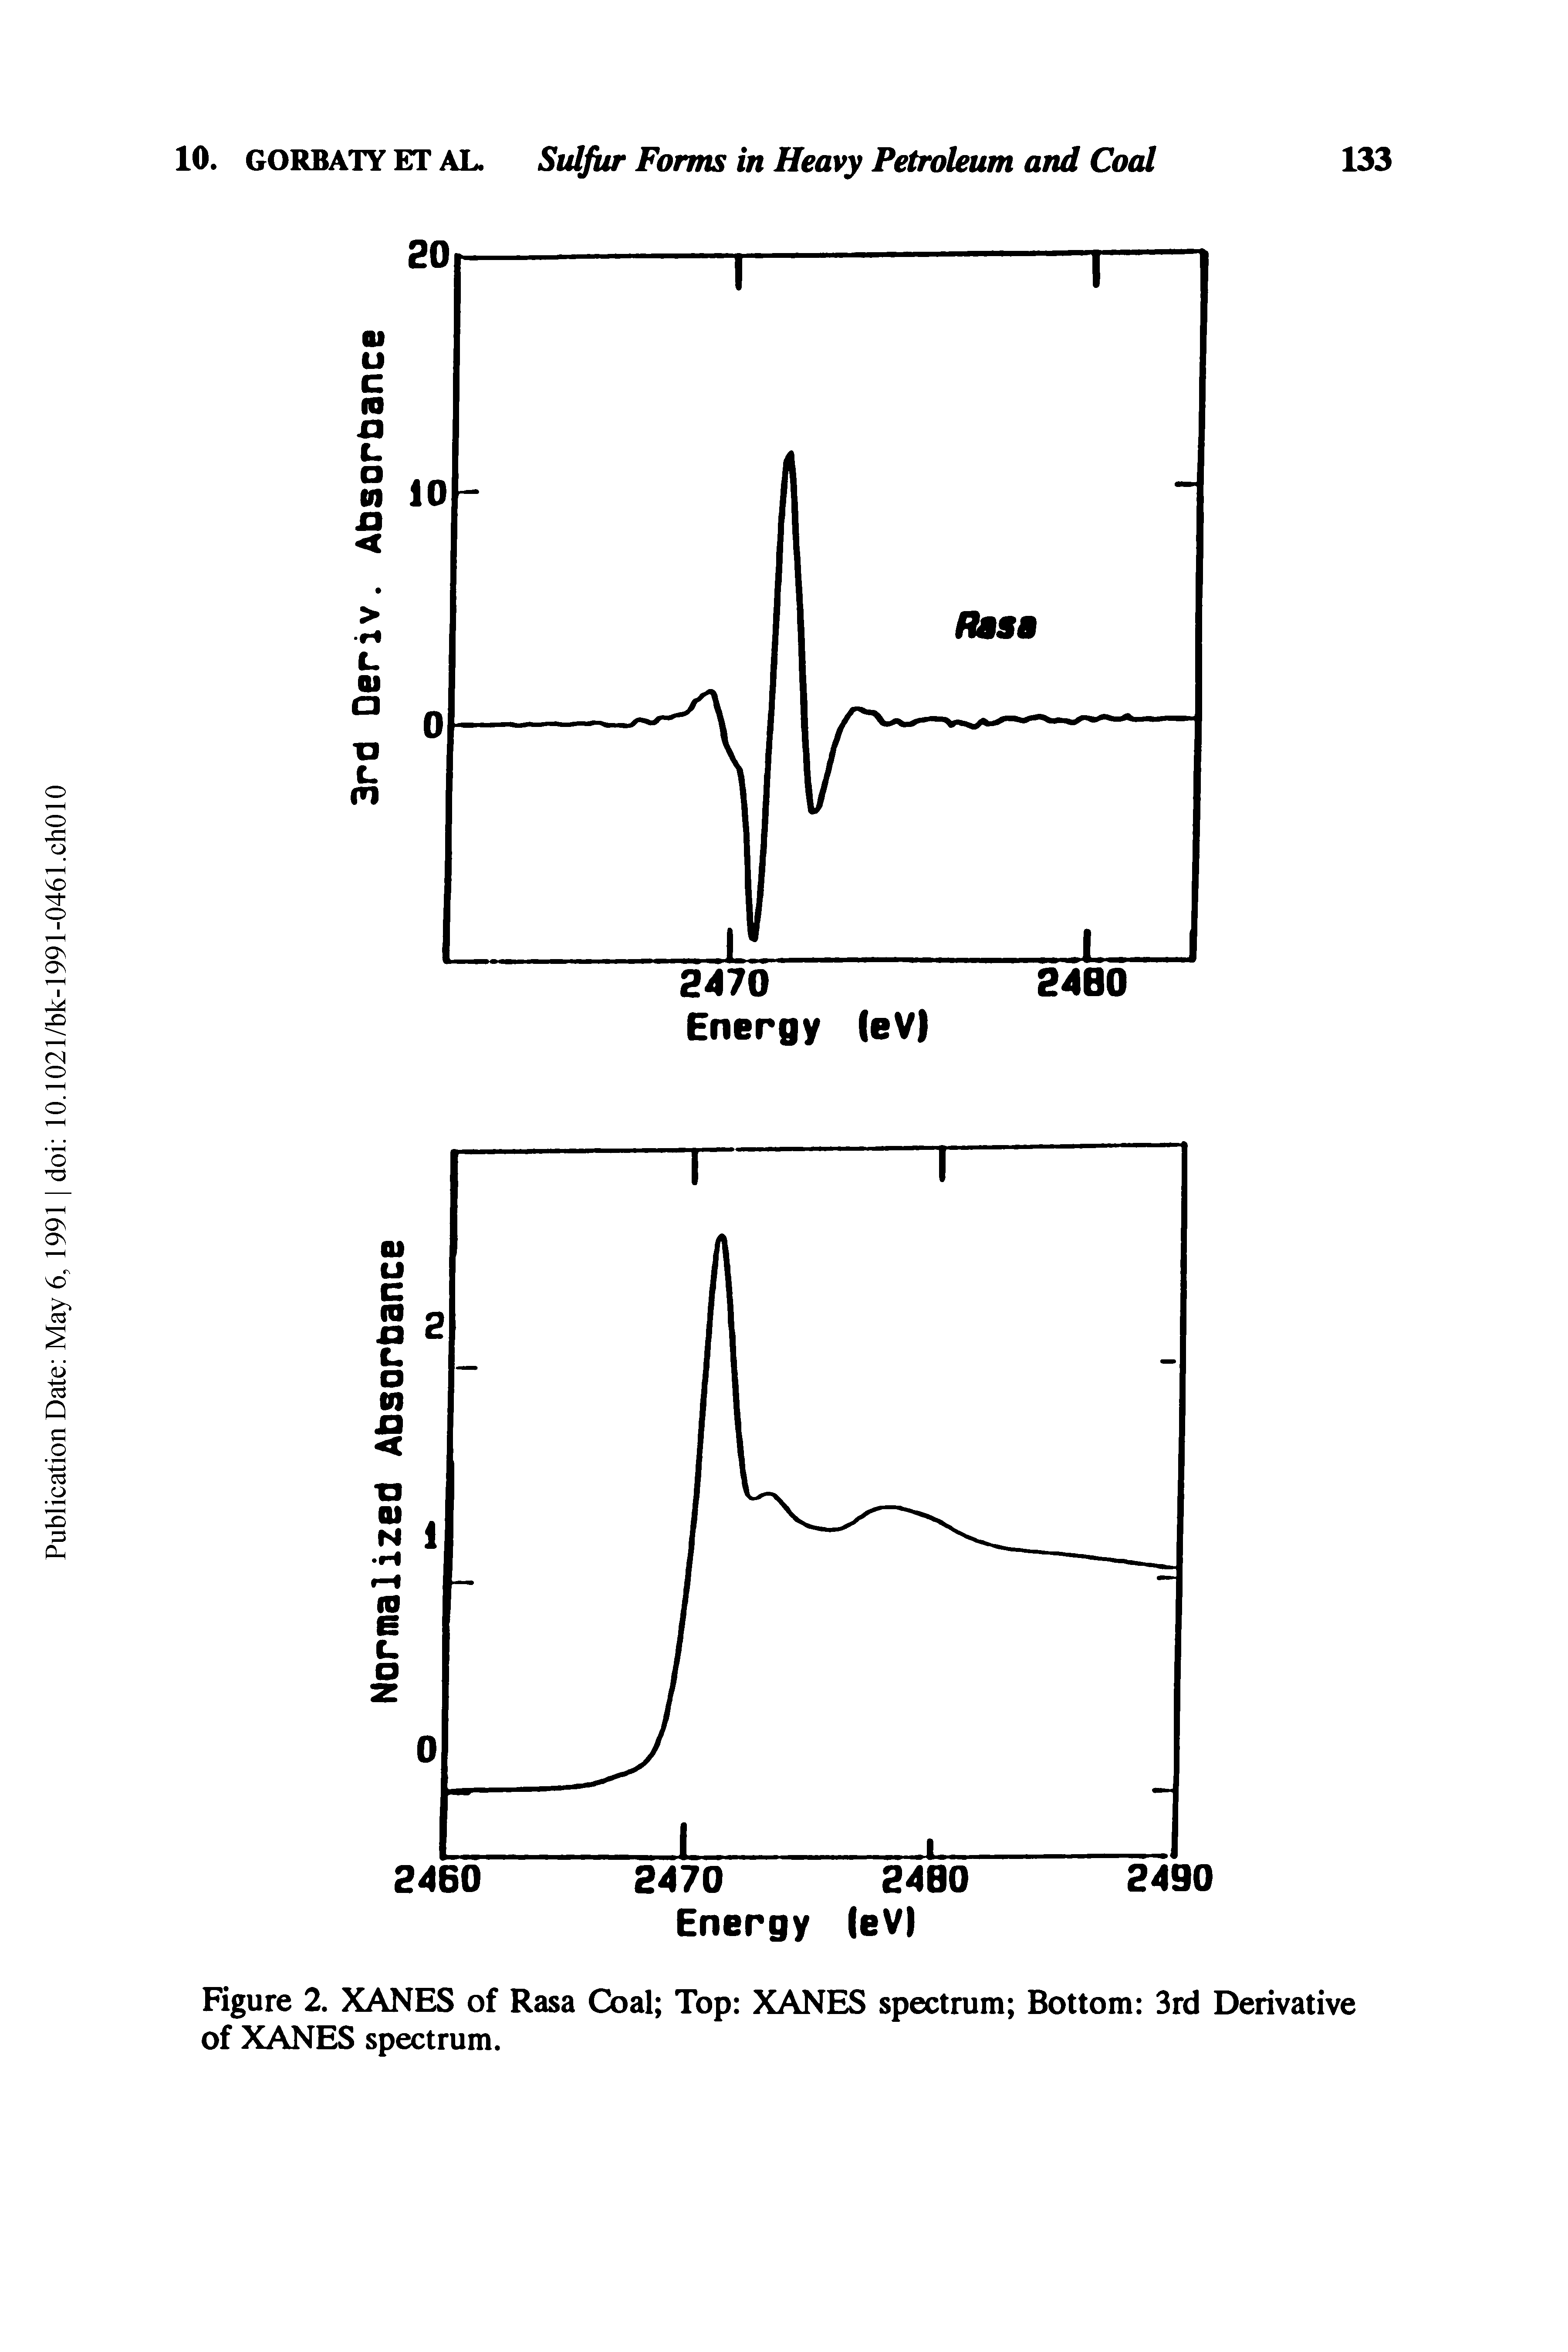 Figure 2. XANES of Rasa Coal Top XANES spectrum Bottom 3rd Derivative of XANES spectrum.